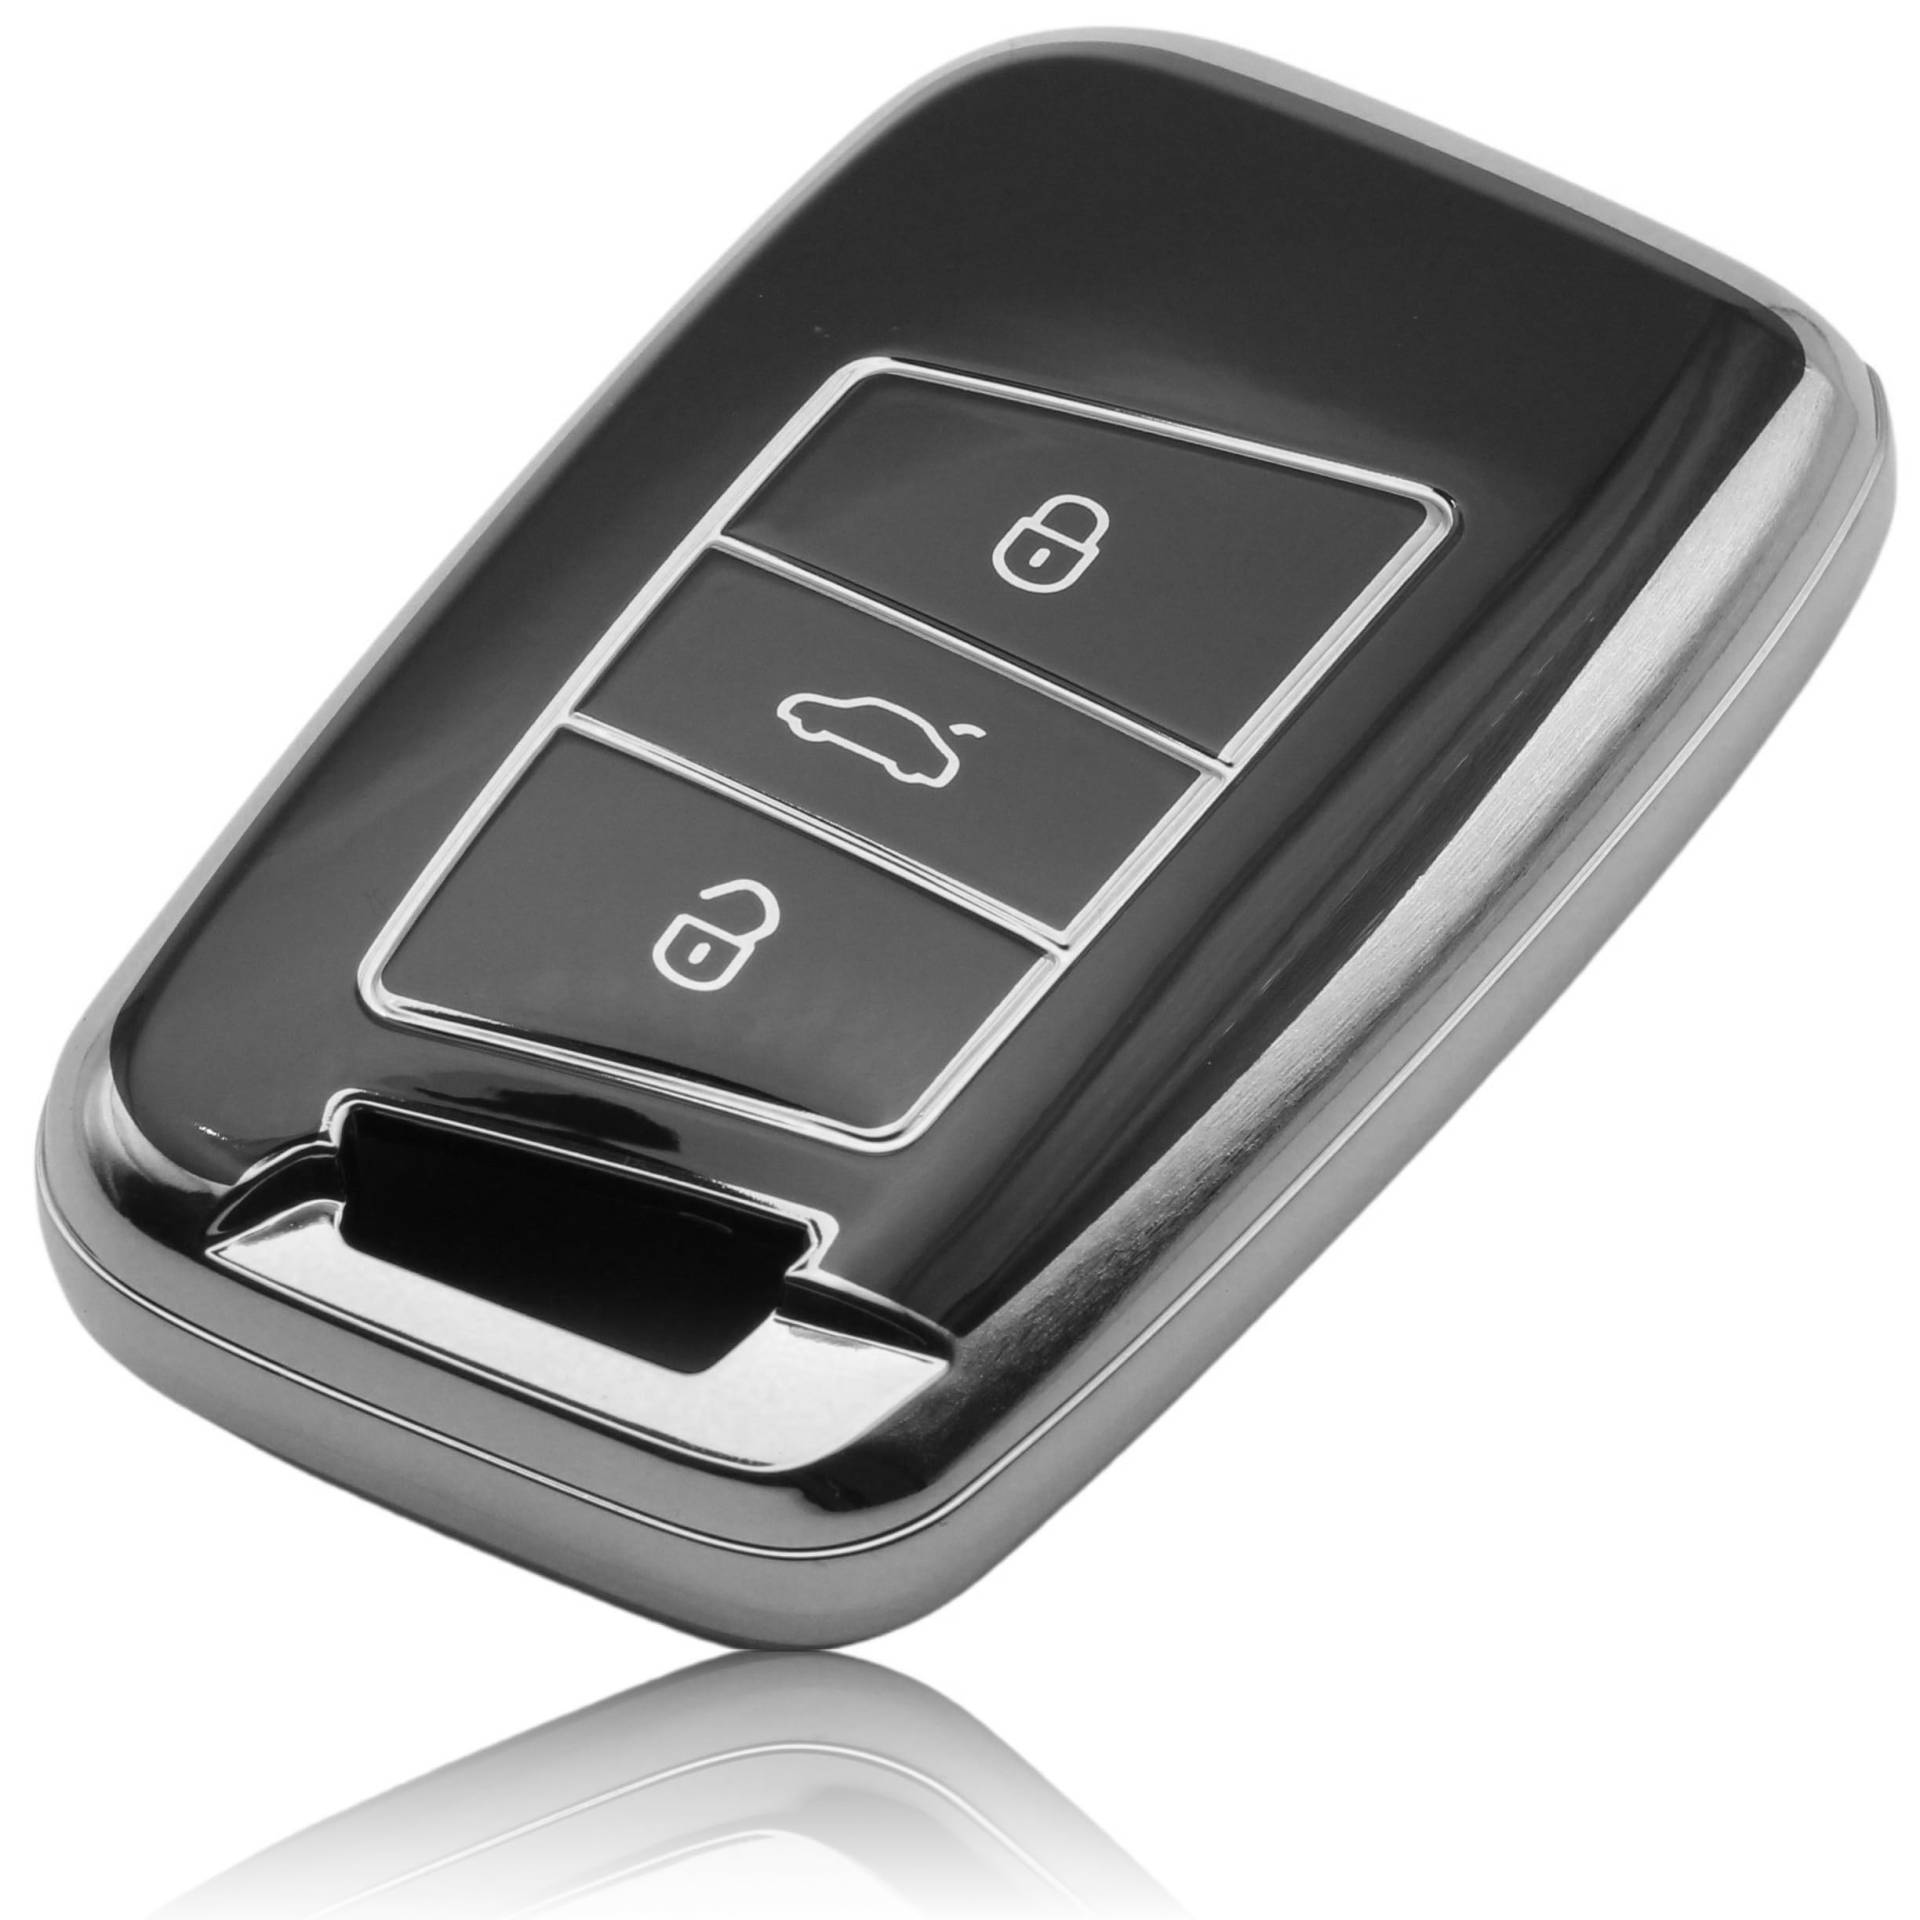 FOAMO Autoschlüssel Hülle Kompatibel mit VW Passat B8, SEAT, Skoda Keyless Autoschlüssel - TPU Schlüsselhülle - Schutz-Hülle für Autoschlüssel Schwarz-Silber von FOAMO